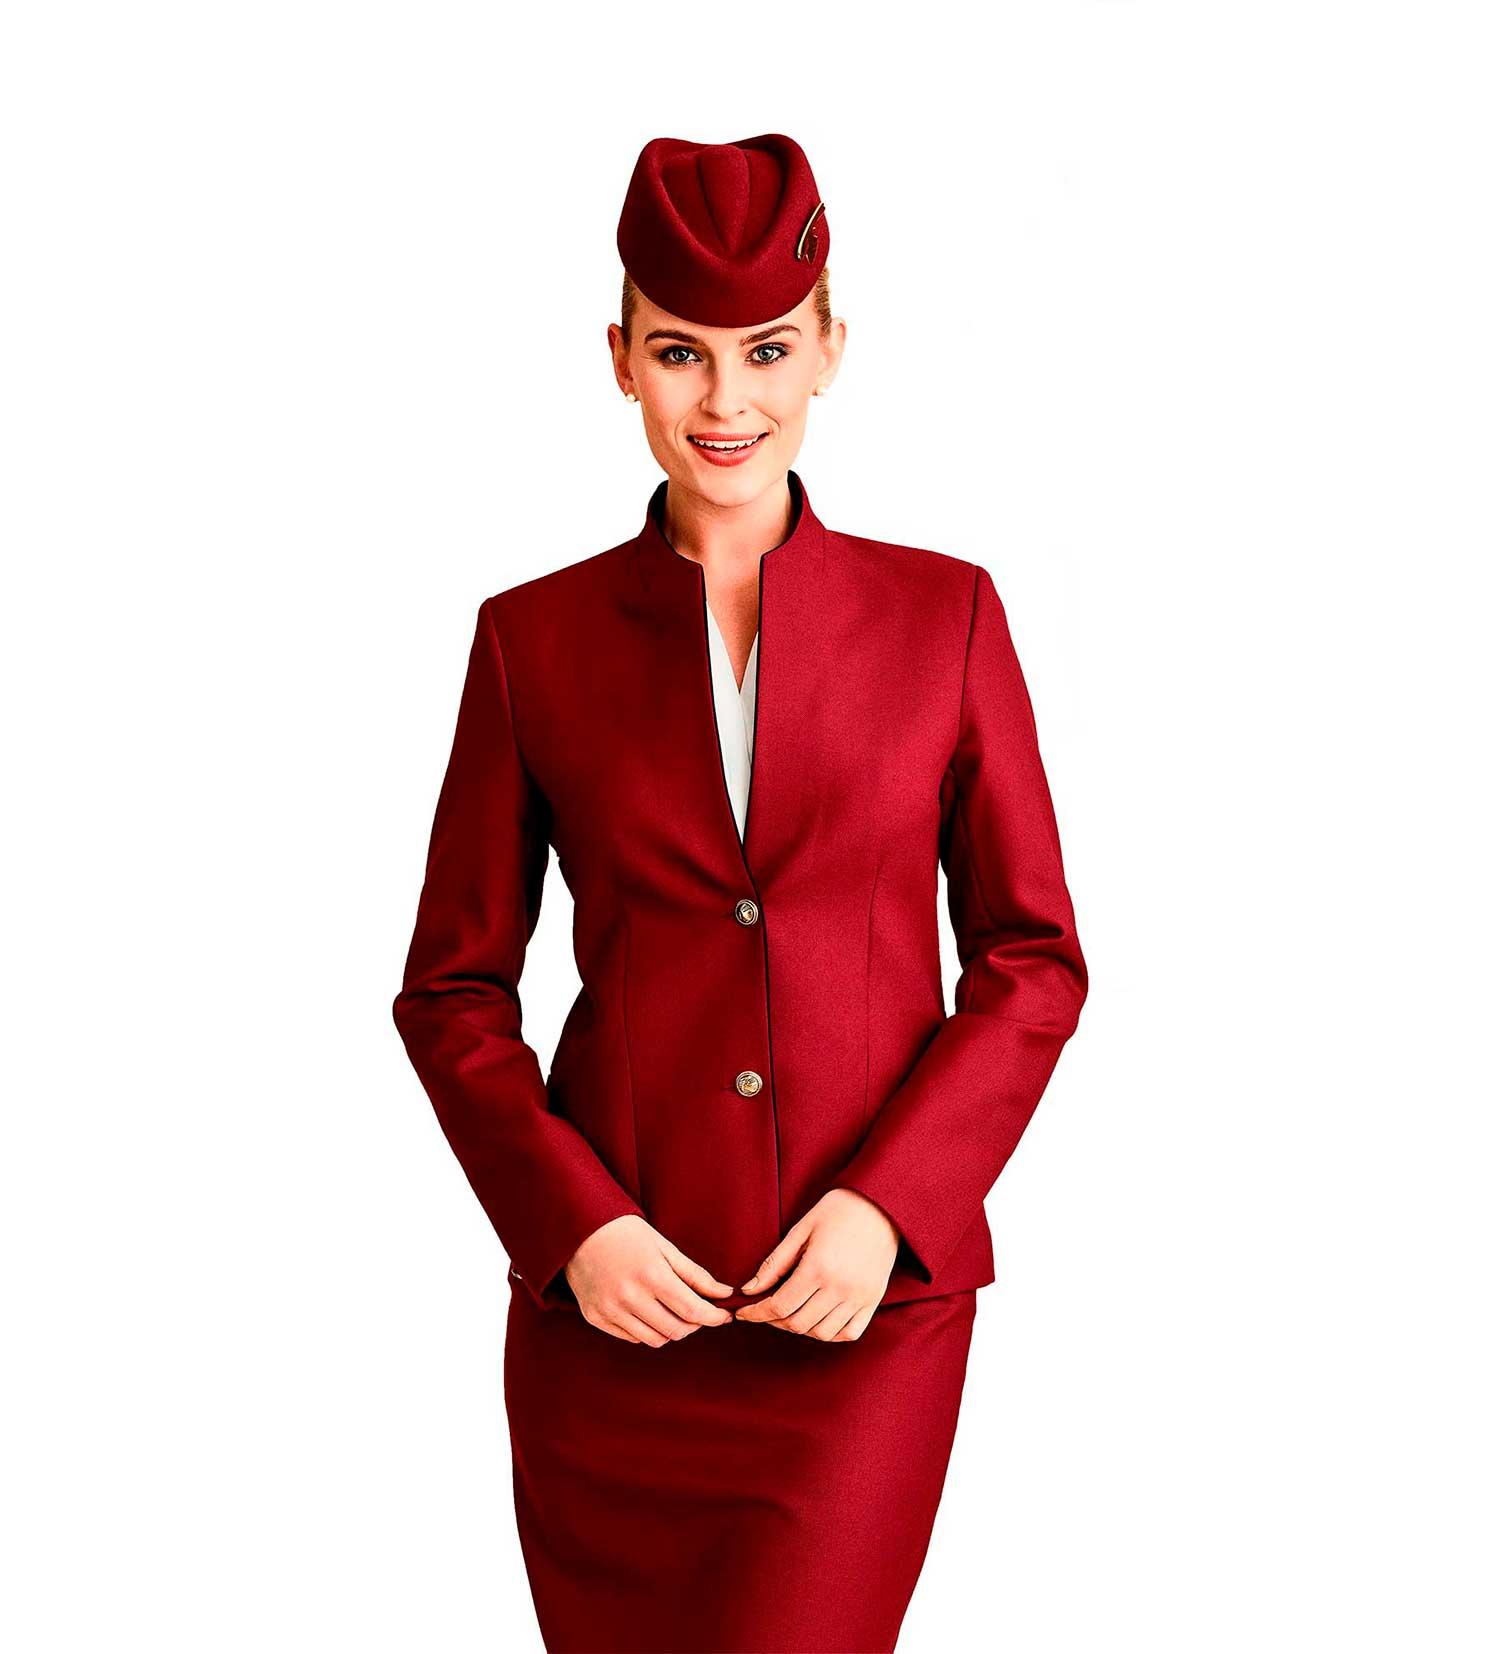 Skirt designed for Qatar Airways